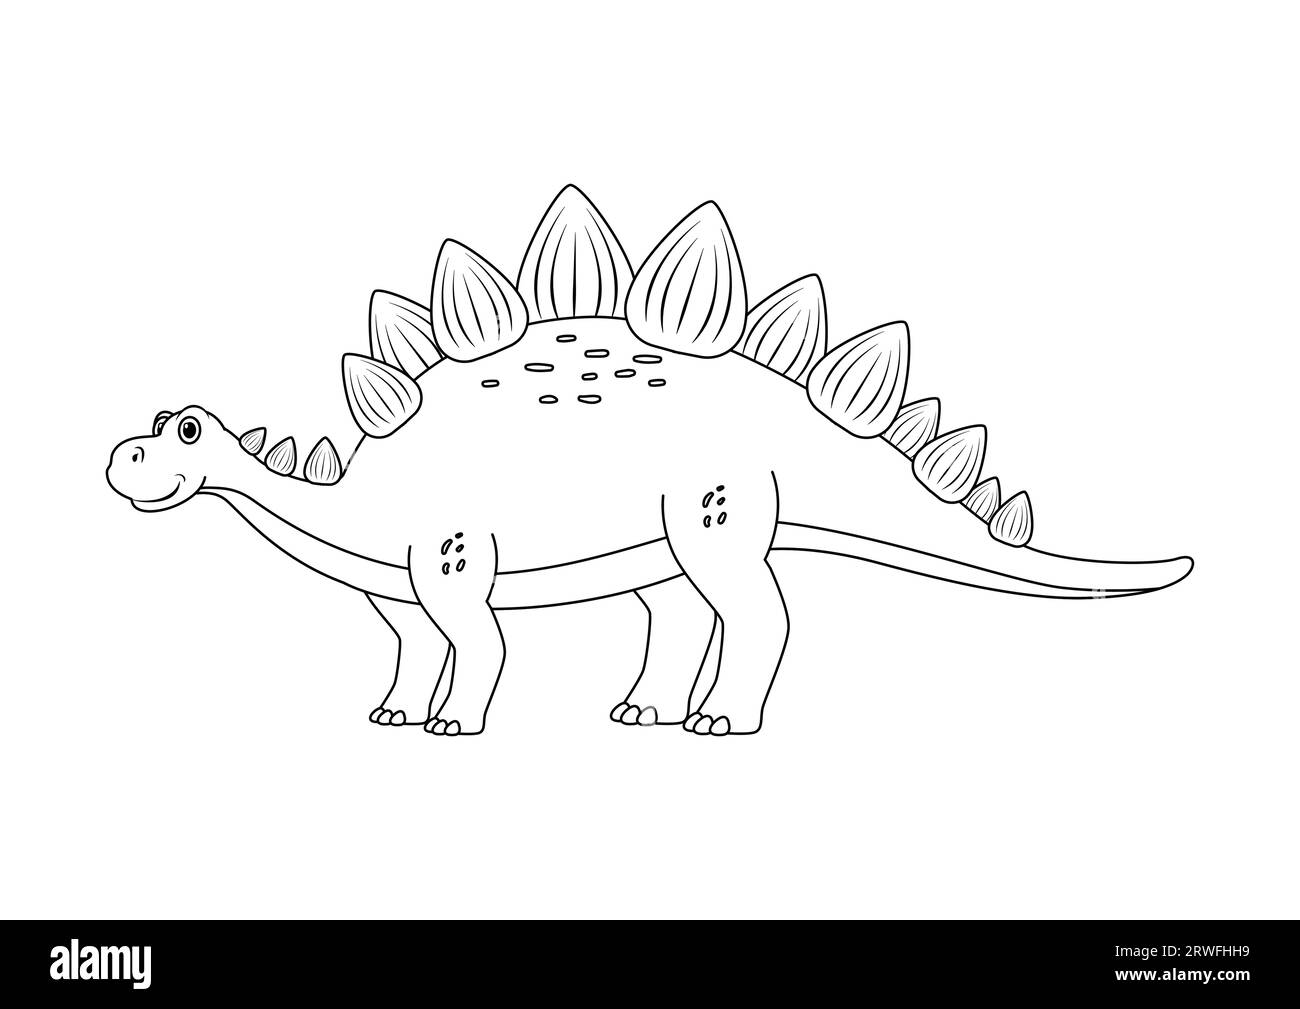 Black and White Stegosaurus Dinosaur Cartoon Character Vector. Coloring Page of a Stegosaurus Dinosaur Stock Vector